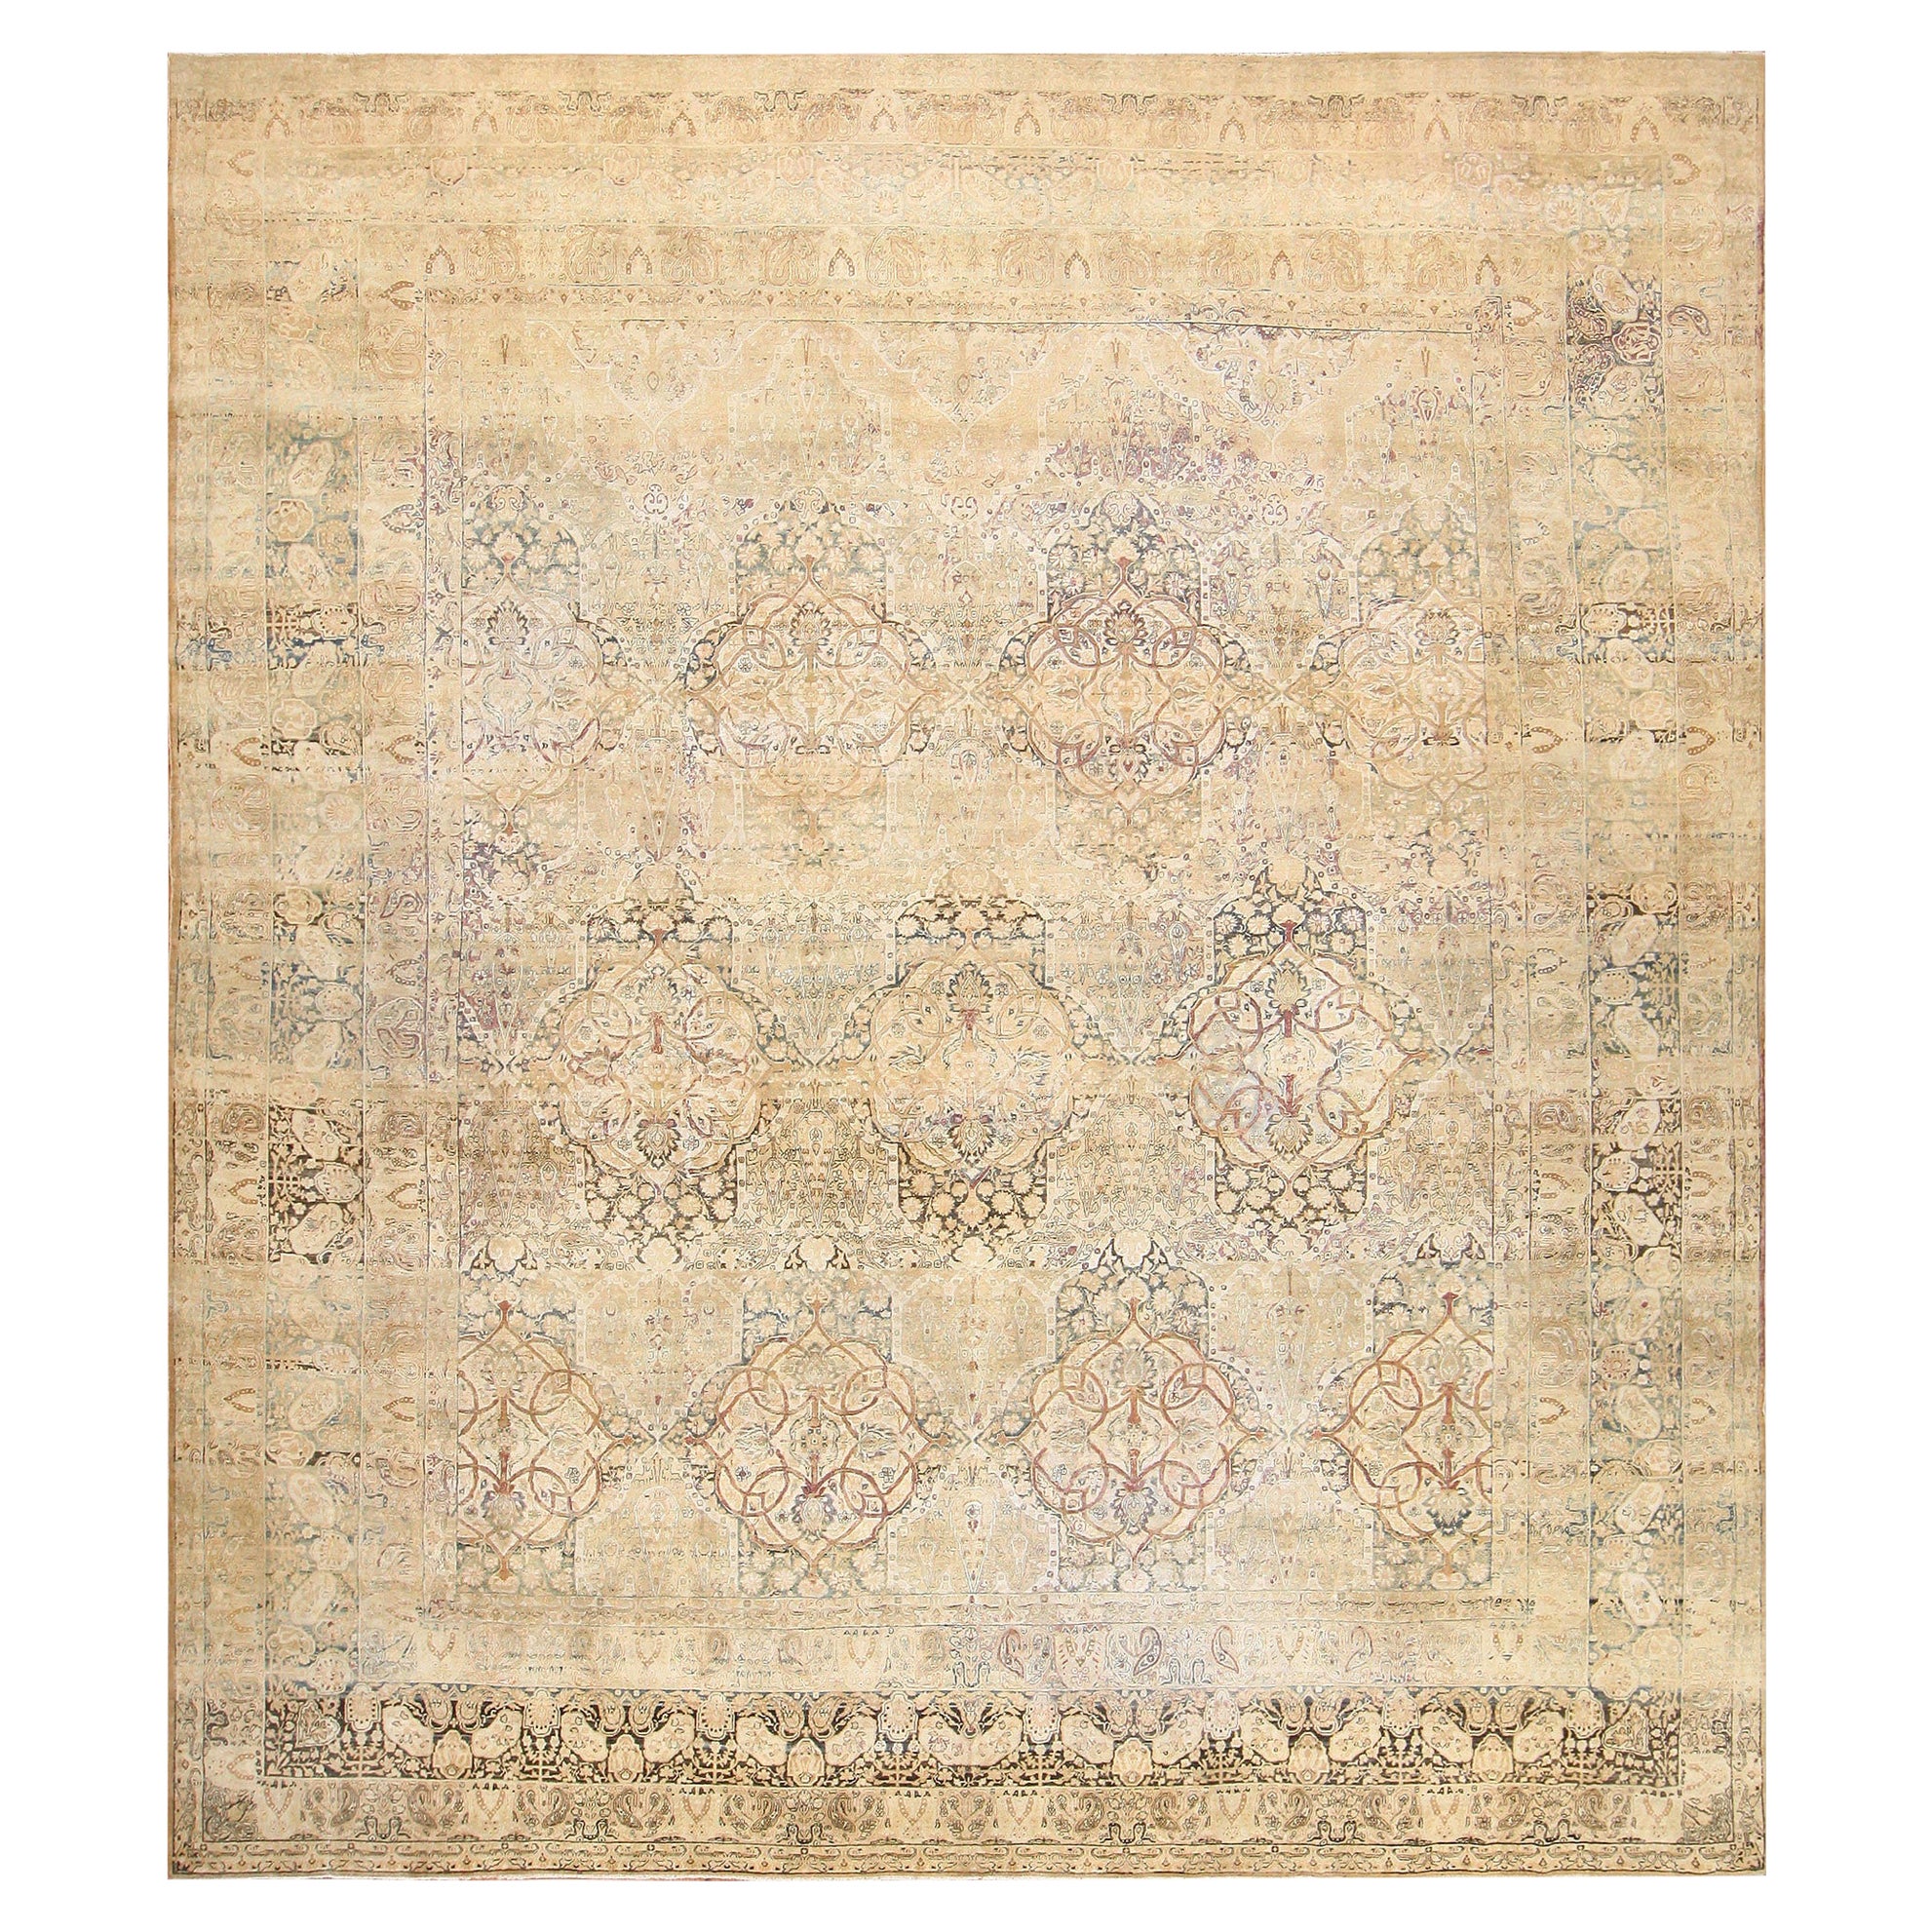 Feiner antiker persischer Kerman-Teppich in Großformat 14'4" x 16'6"